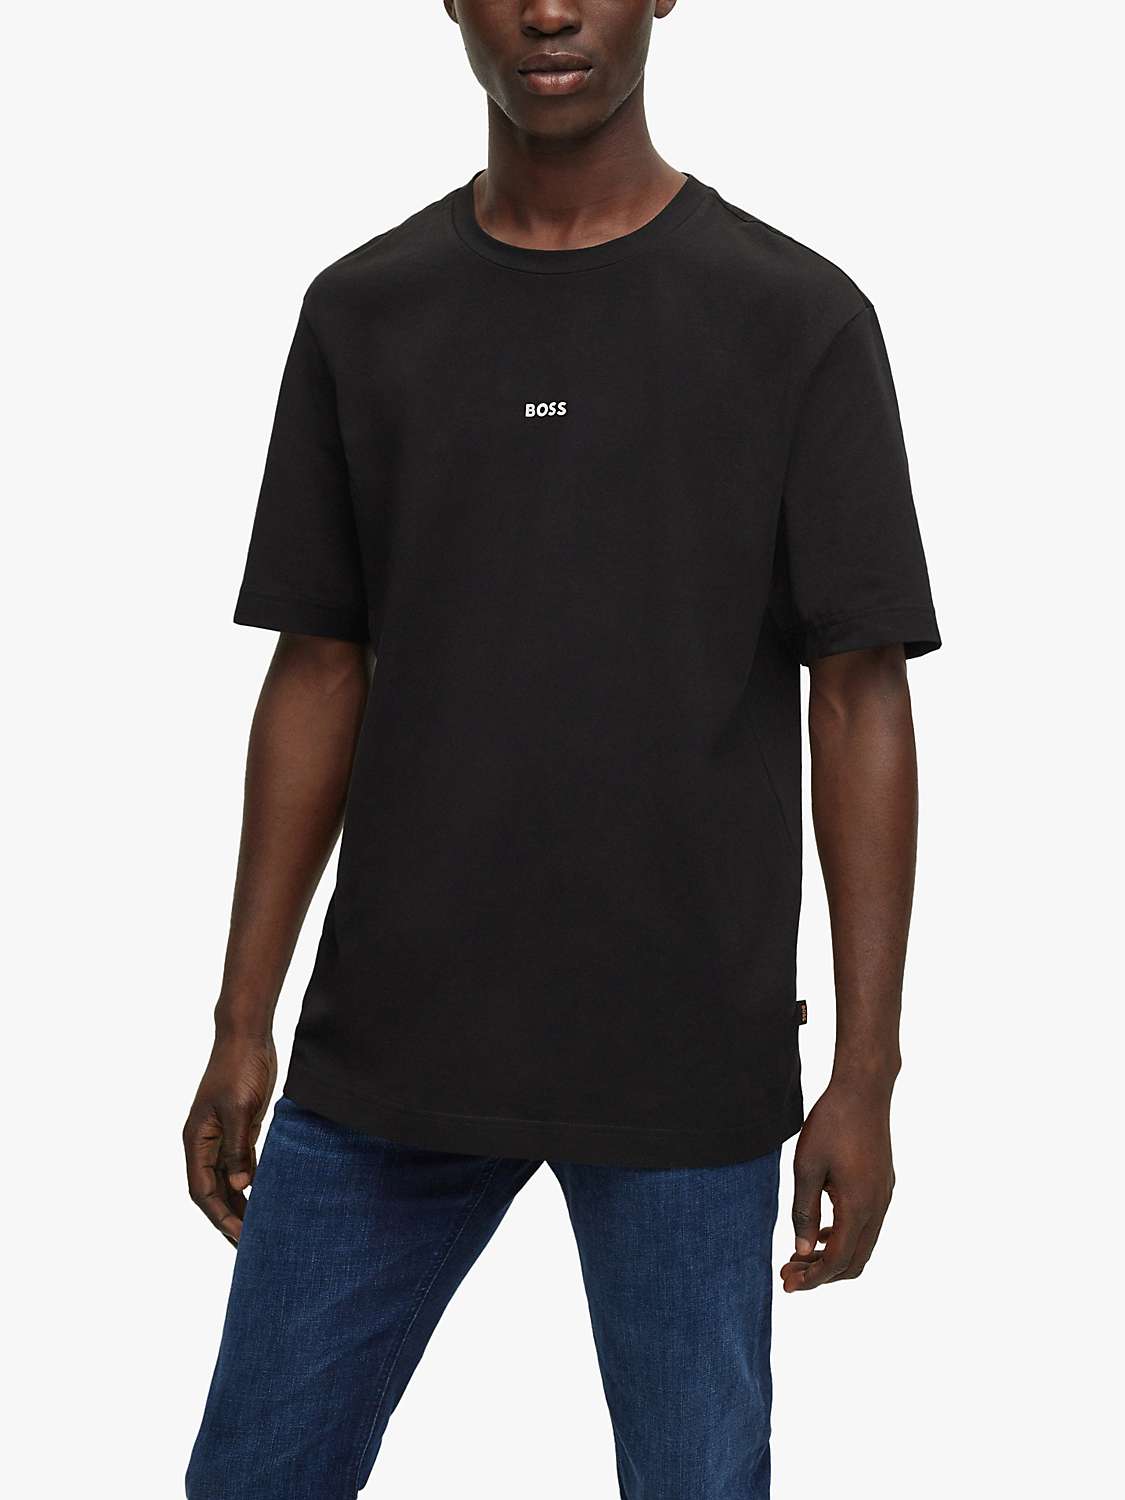 BOSS TChup Logo T-Shirt, Black at John Lewis & Partners